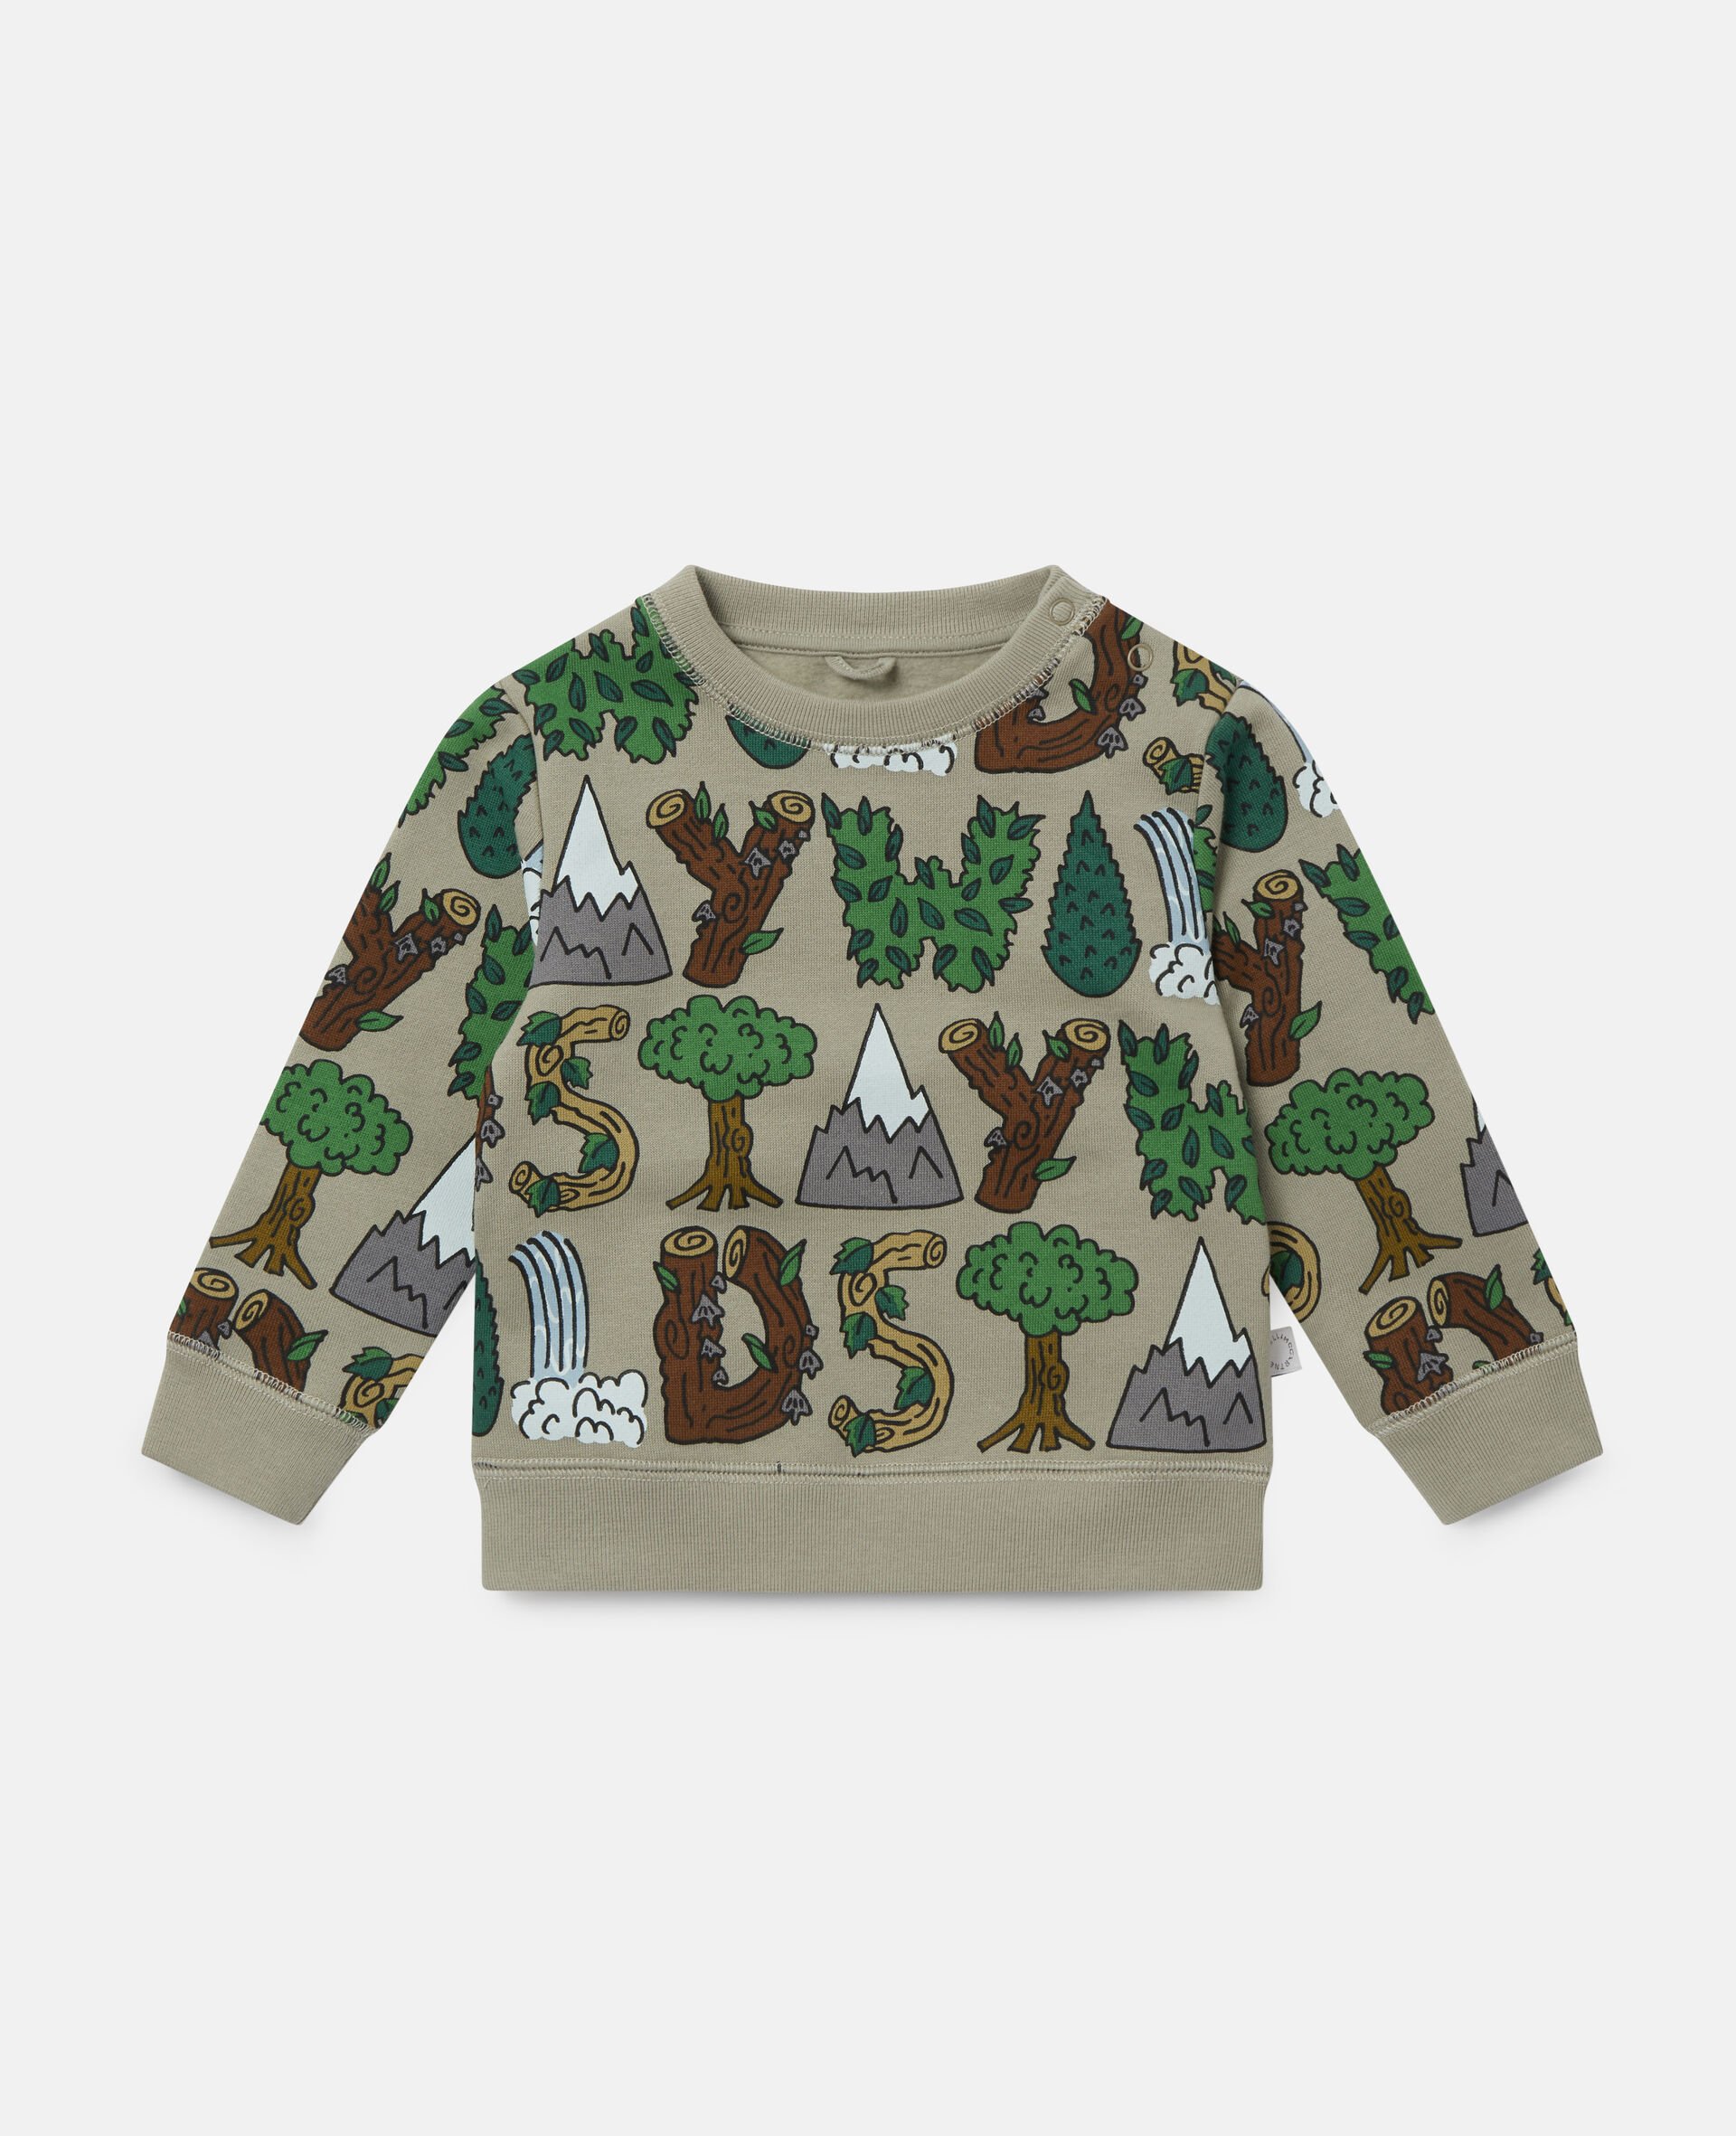 'Stay Wild' Fleece Sweatshirt-Green-large image number 0